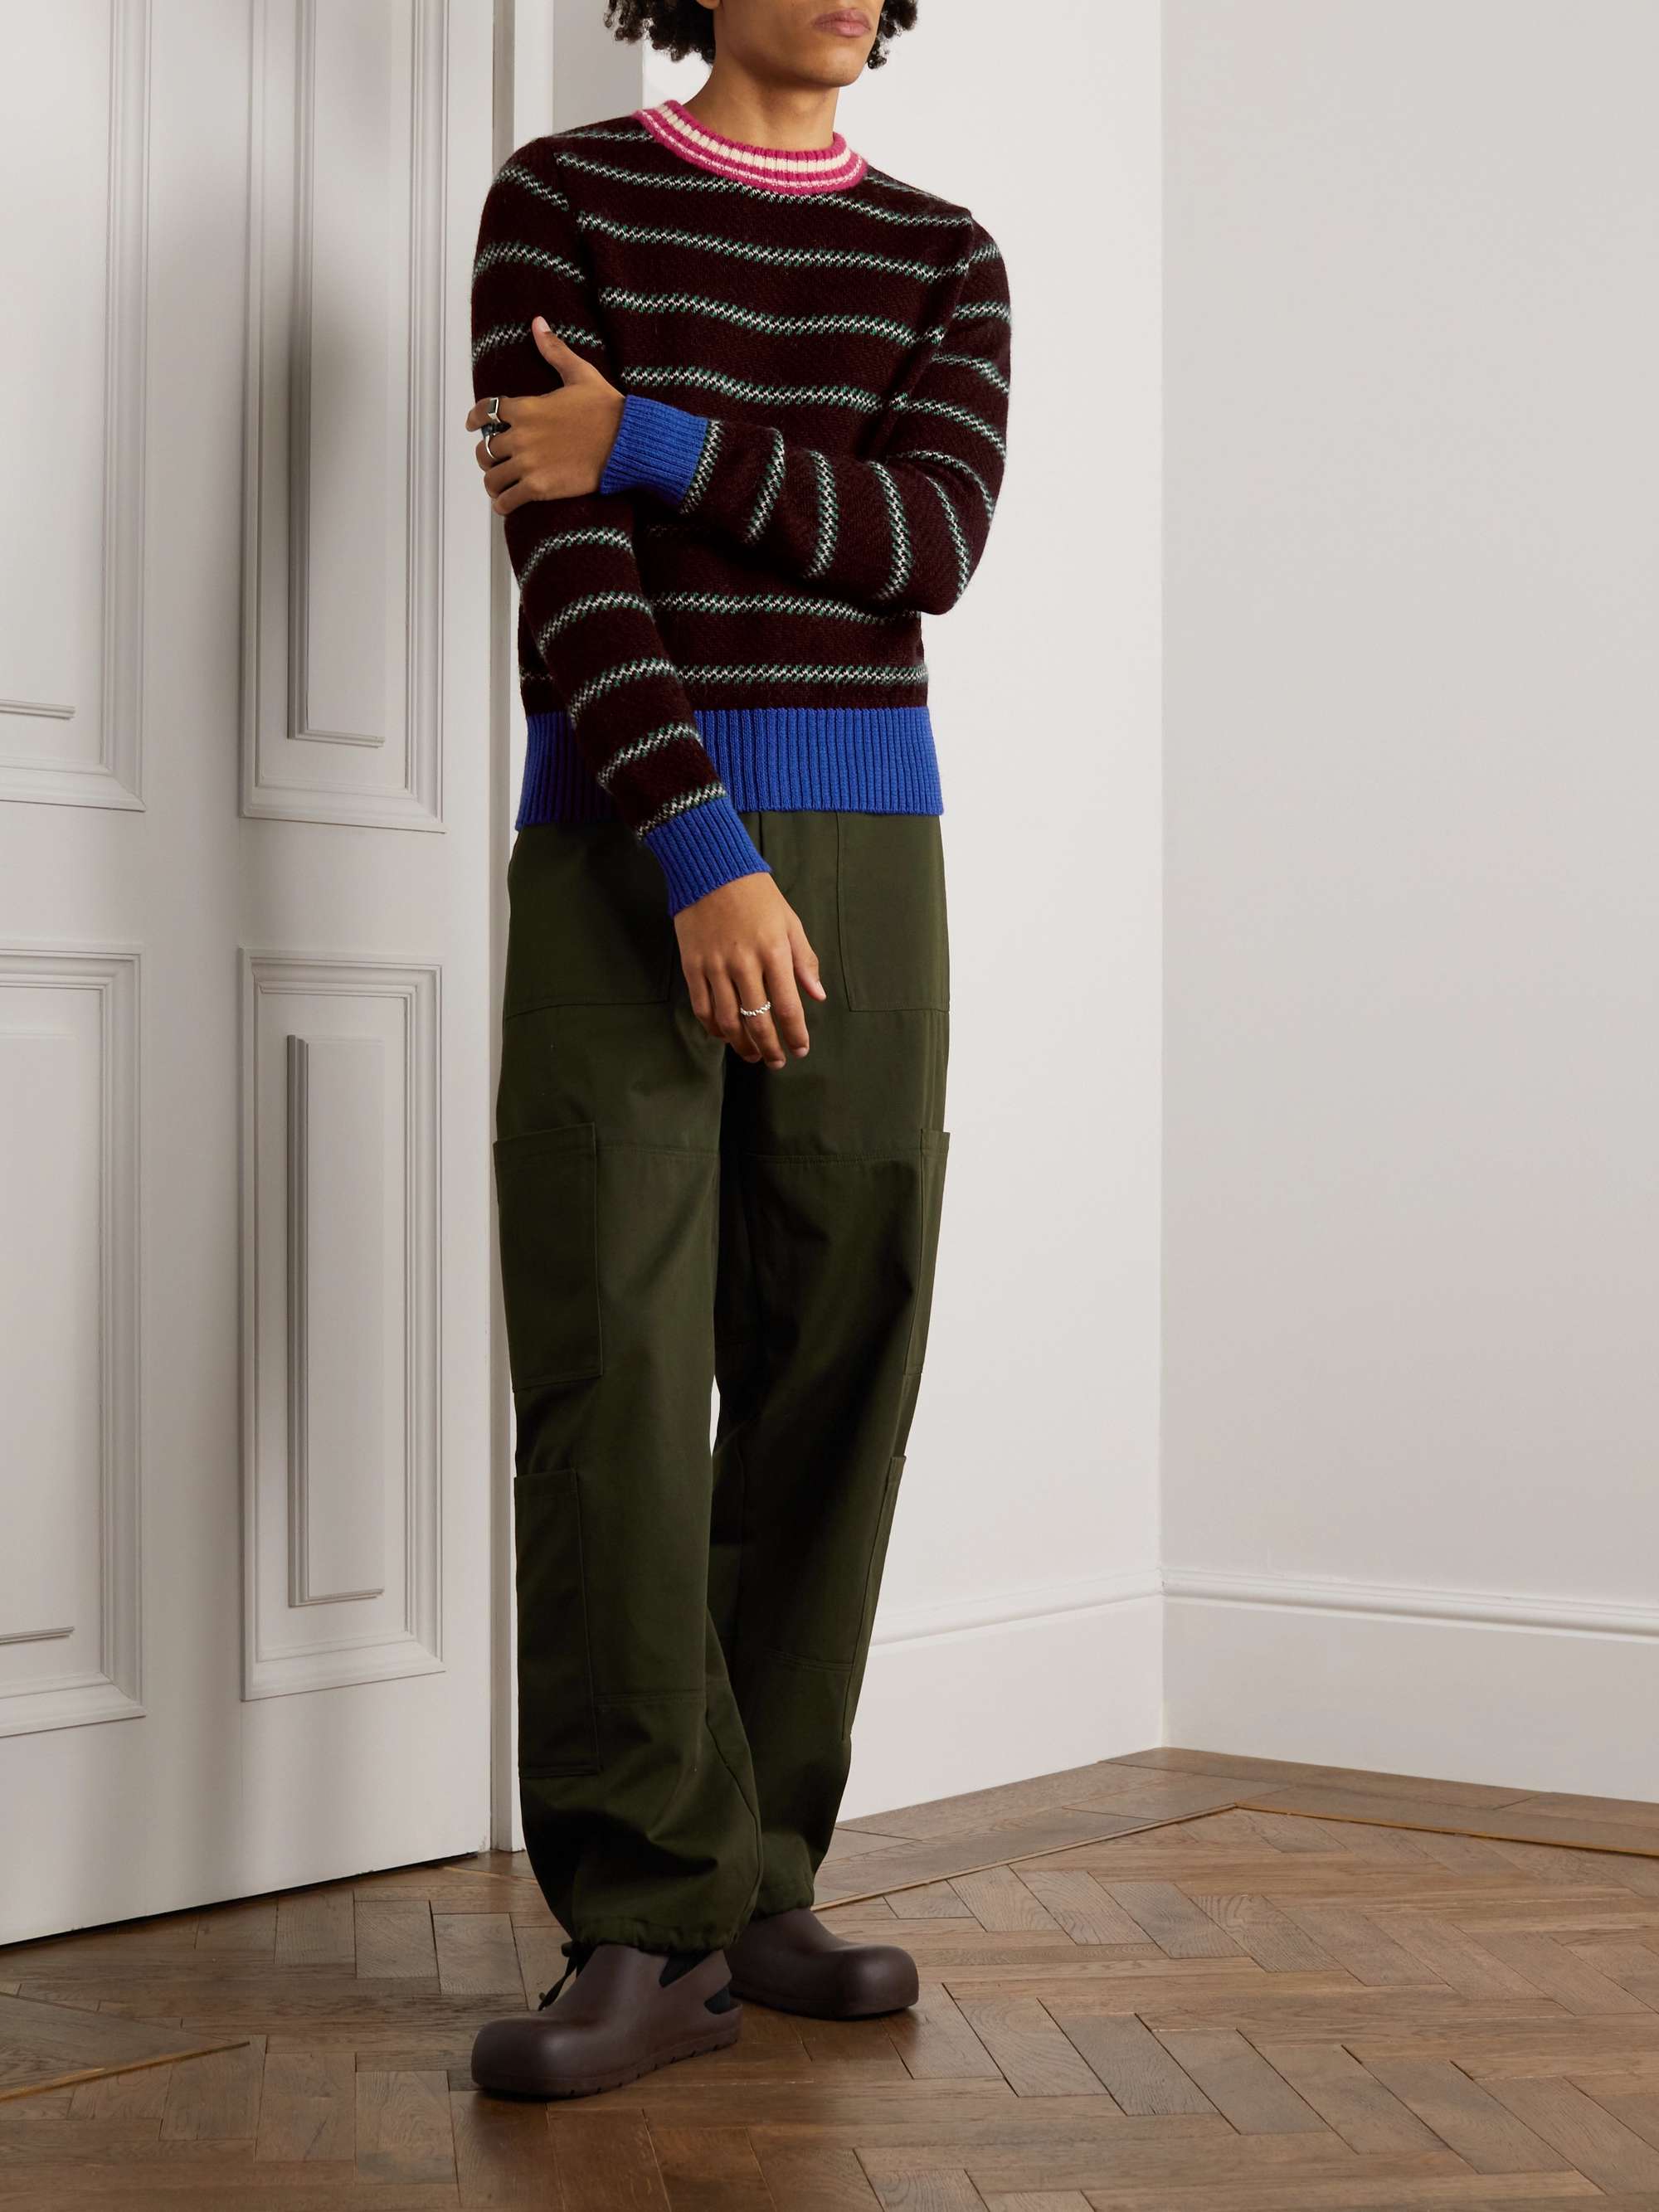 WALES BONNER Sunday Slim-Fit Virgin Wool-Blend Jacquard Sweater